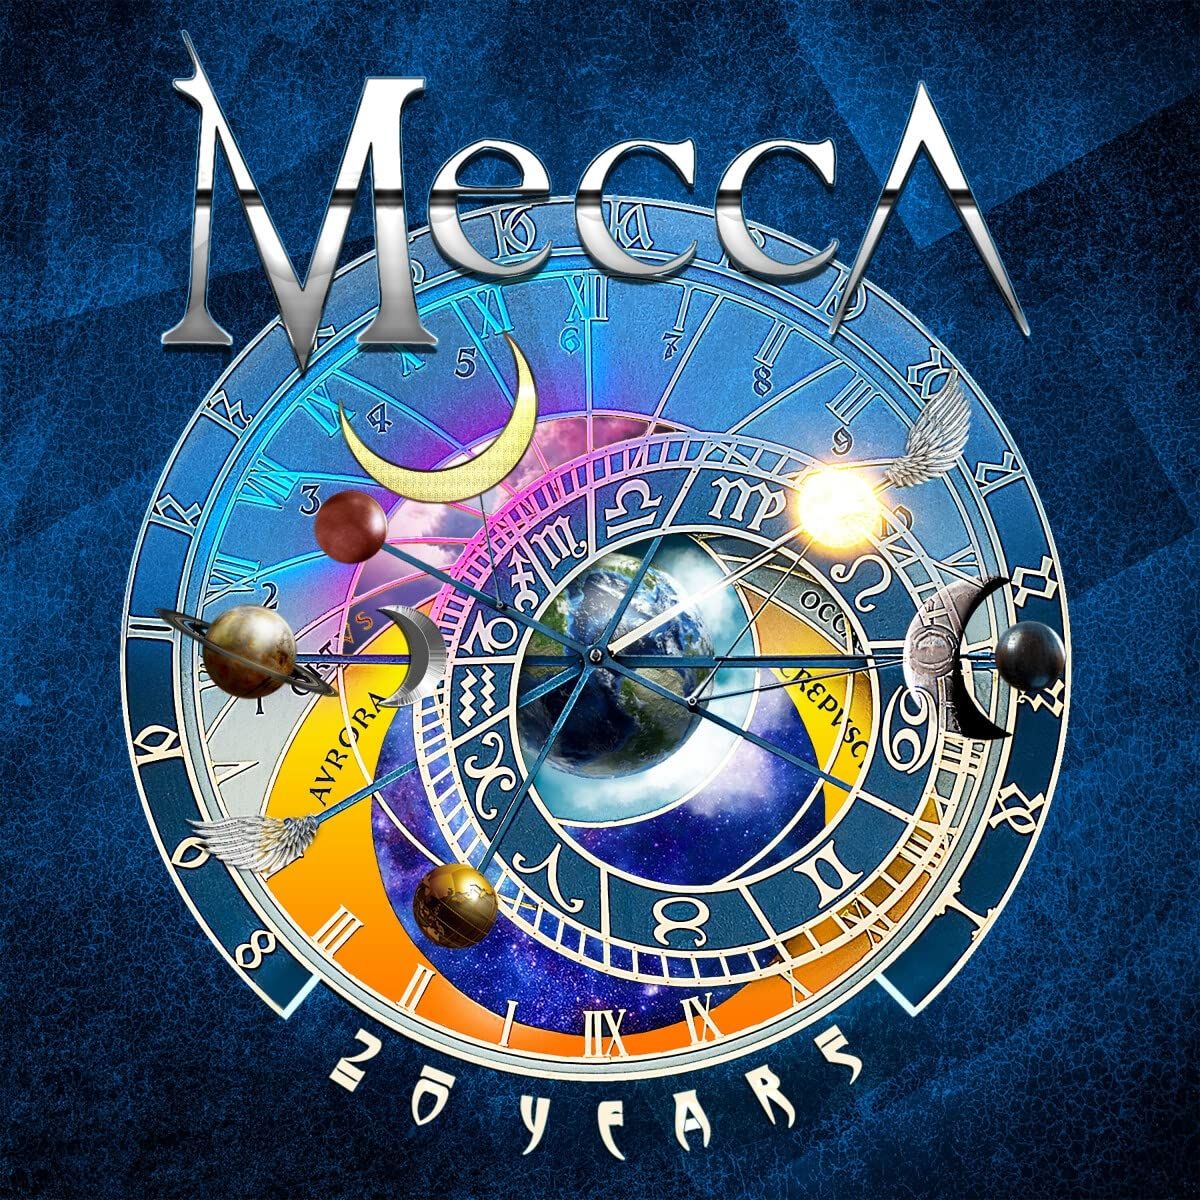 Mecca - 20 Years (Mecca/Undeniable/III) (3CD with 6 bonus tracks) - CD - New